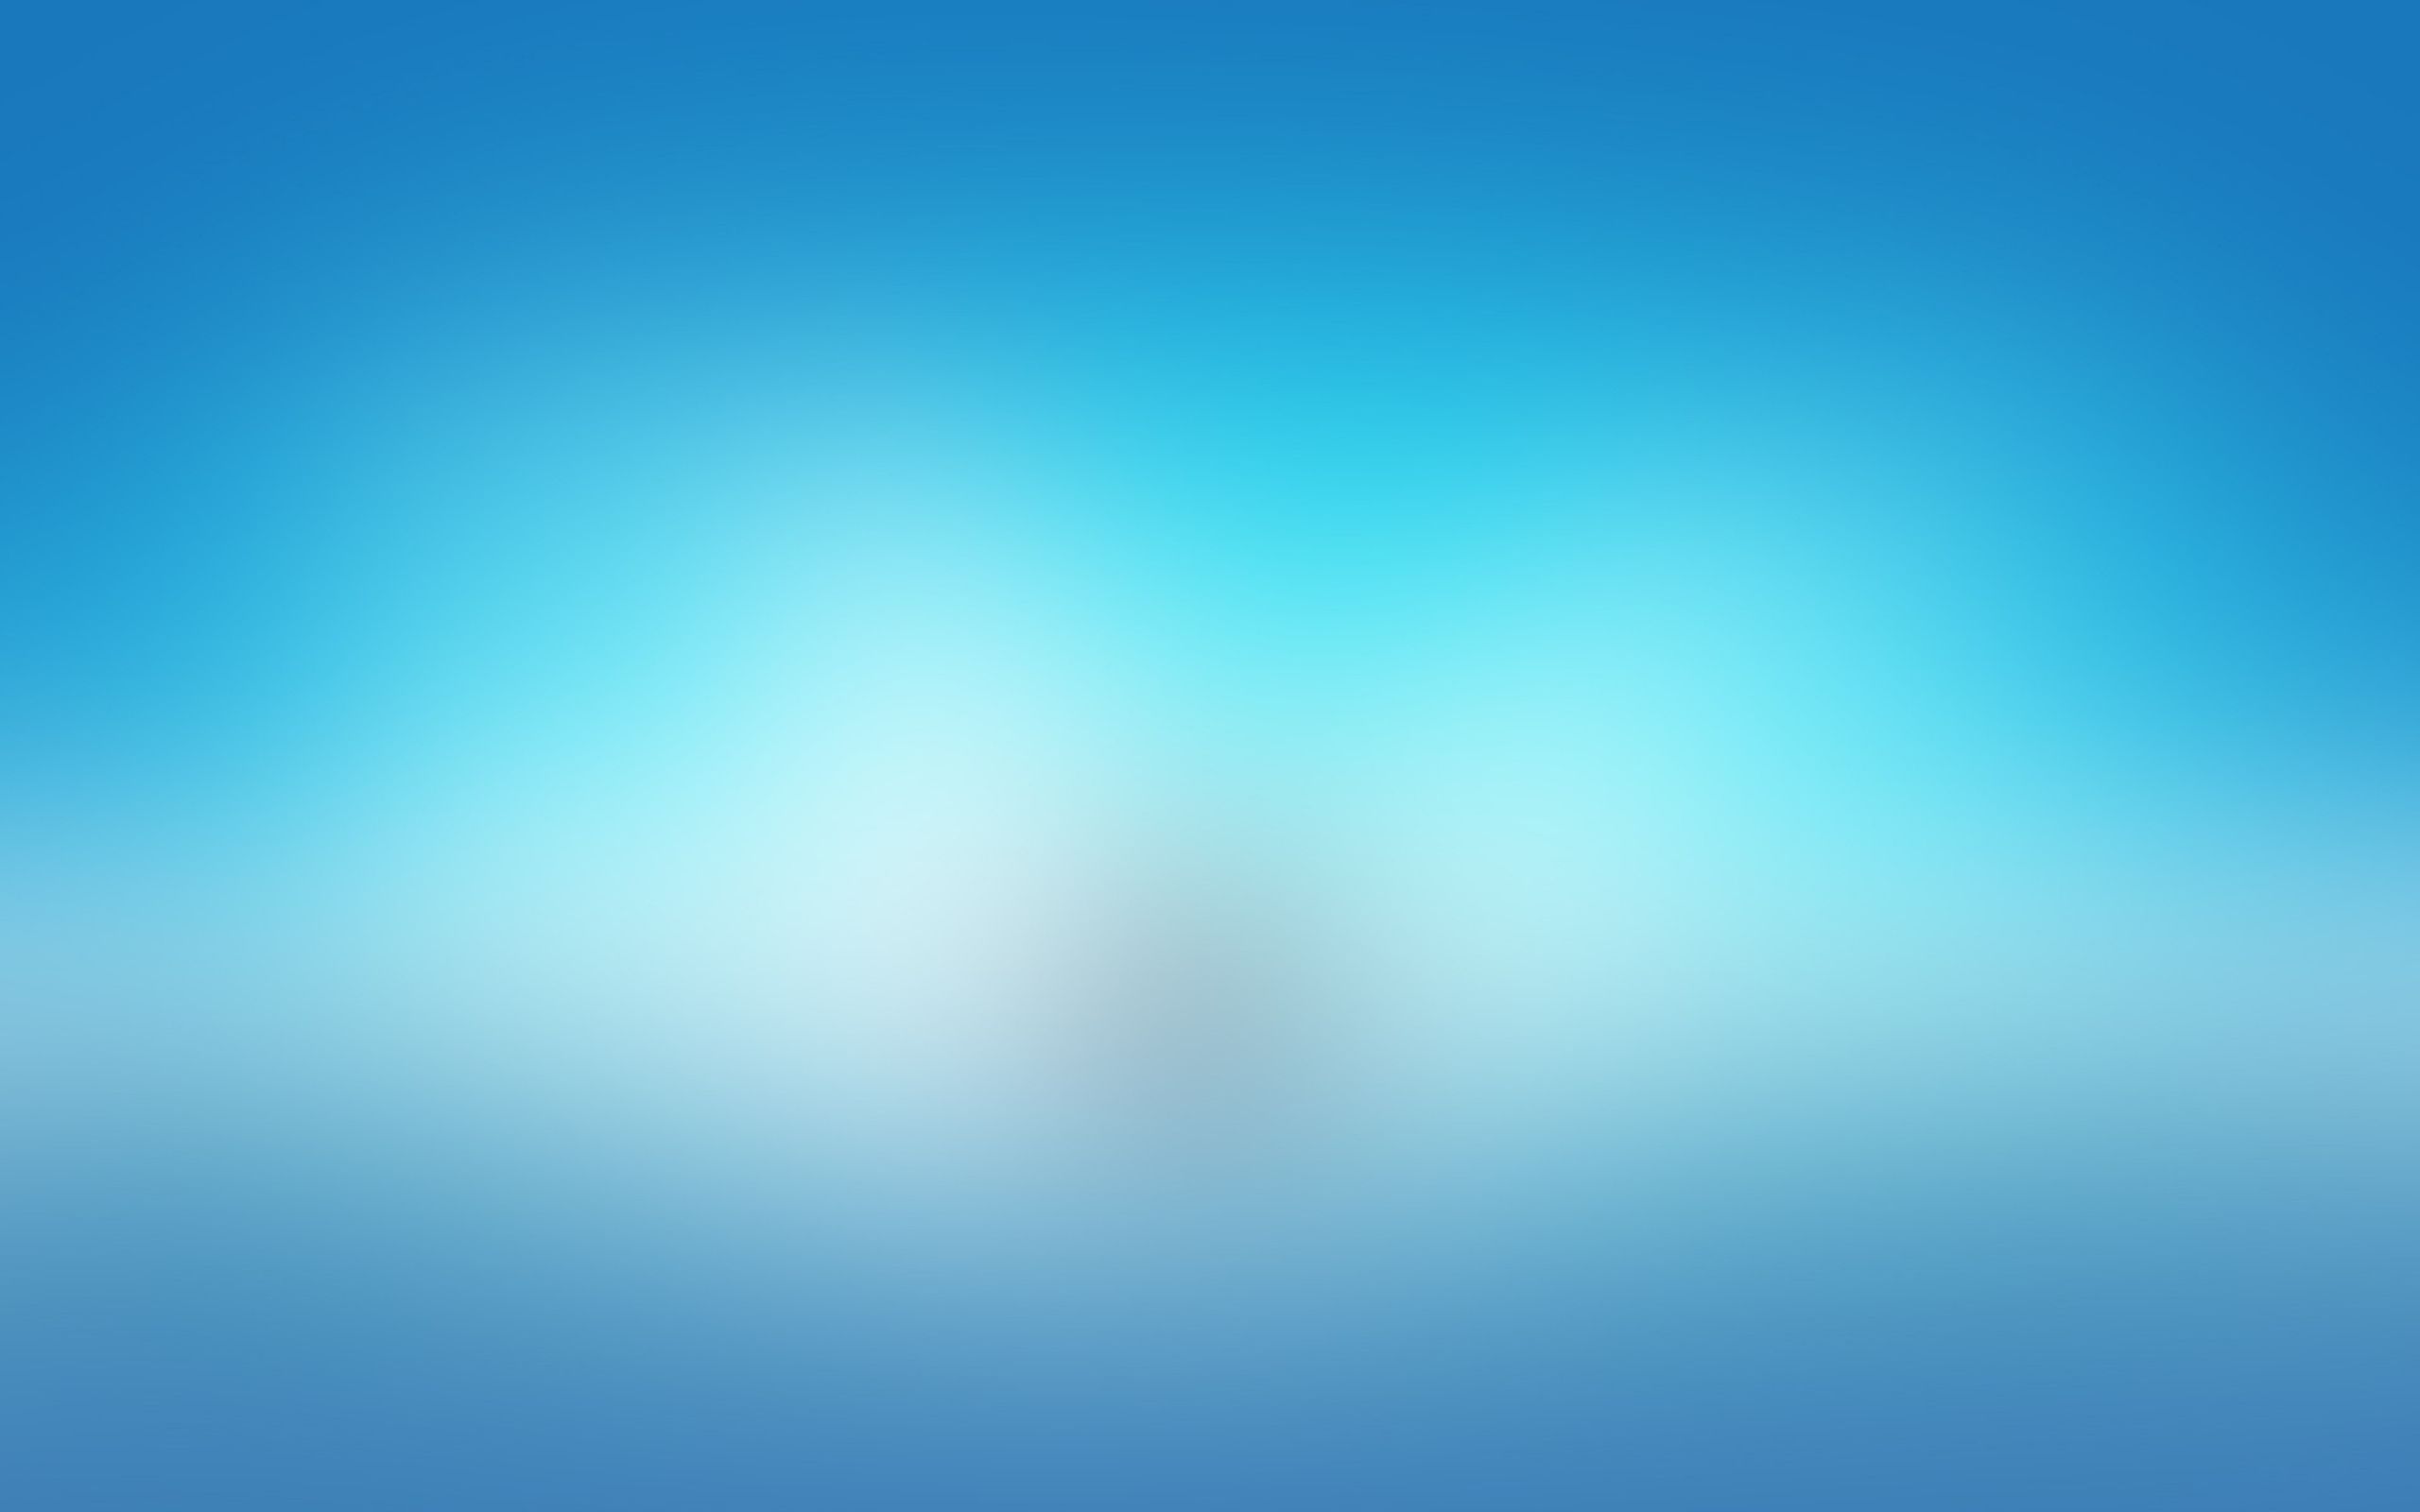 14 Blur HD Wallpapers Backgrounds - Wallpaper Abyss